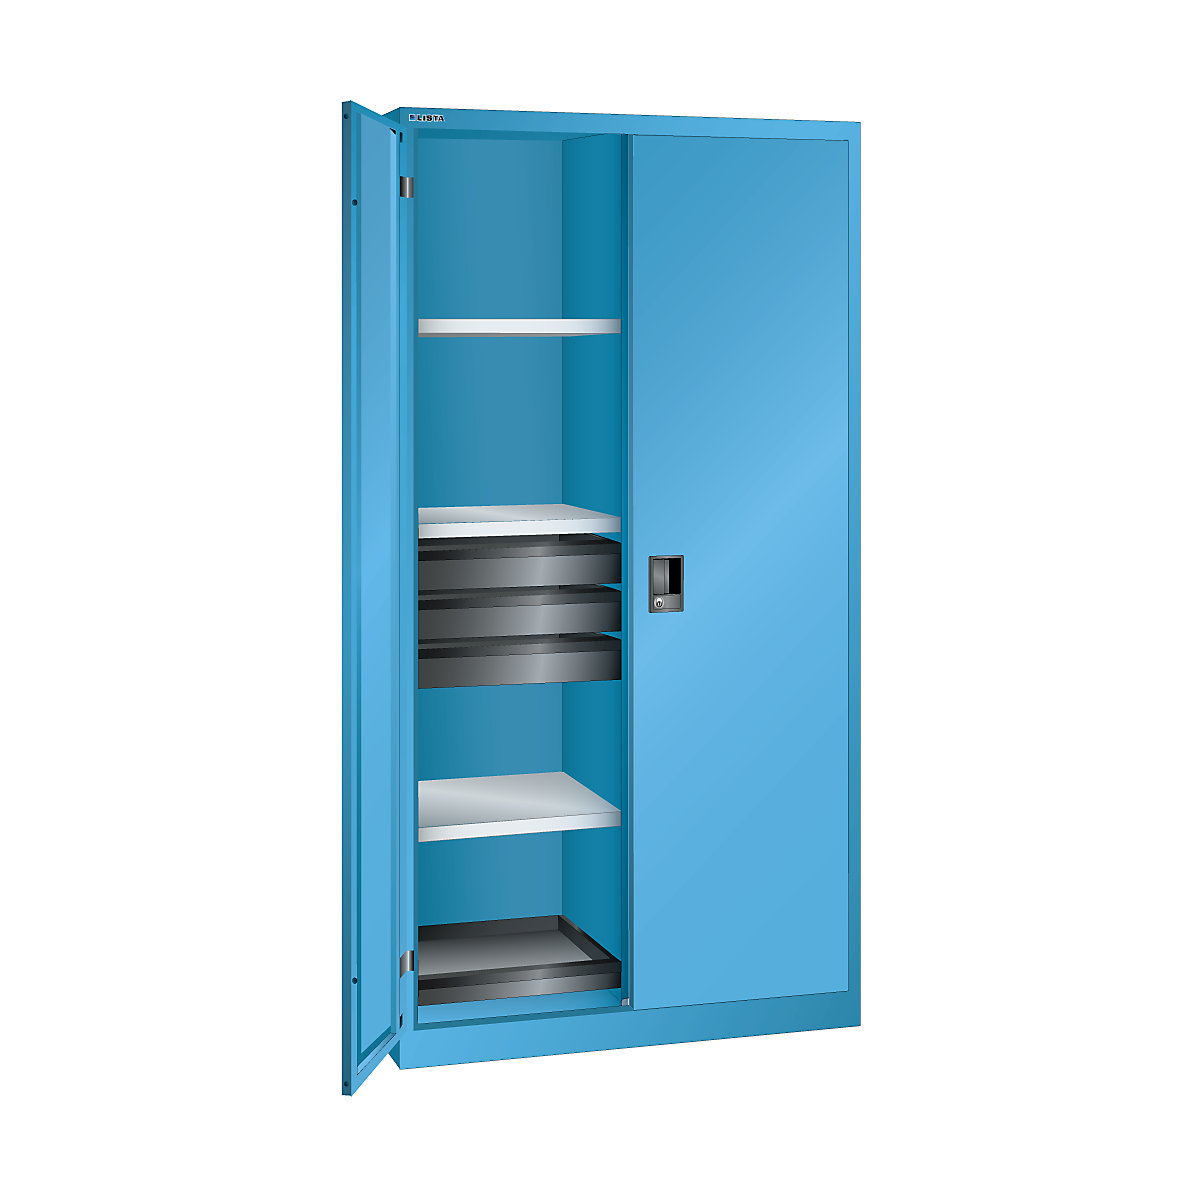 Skříň s otočnými dveřmi, v x š x h 1950 x 1000 x 580 mm – LISTA, 8 polic a 6 zásuvek, světlá modrá-9